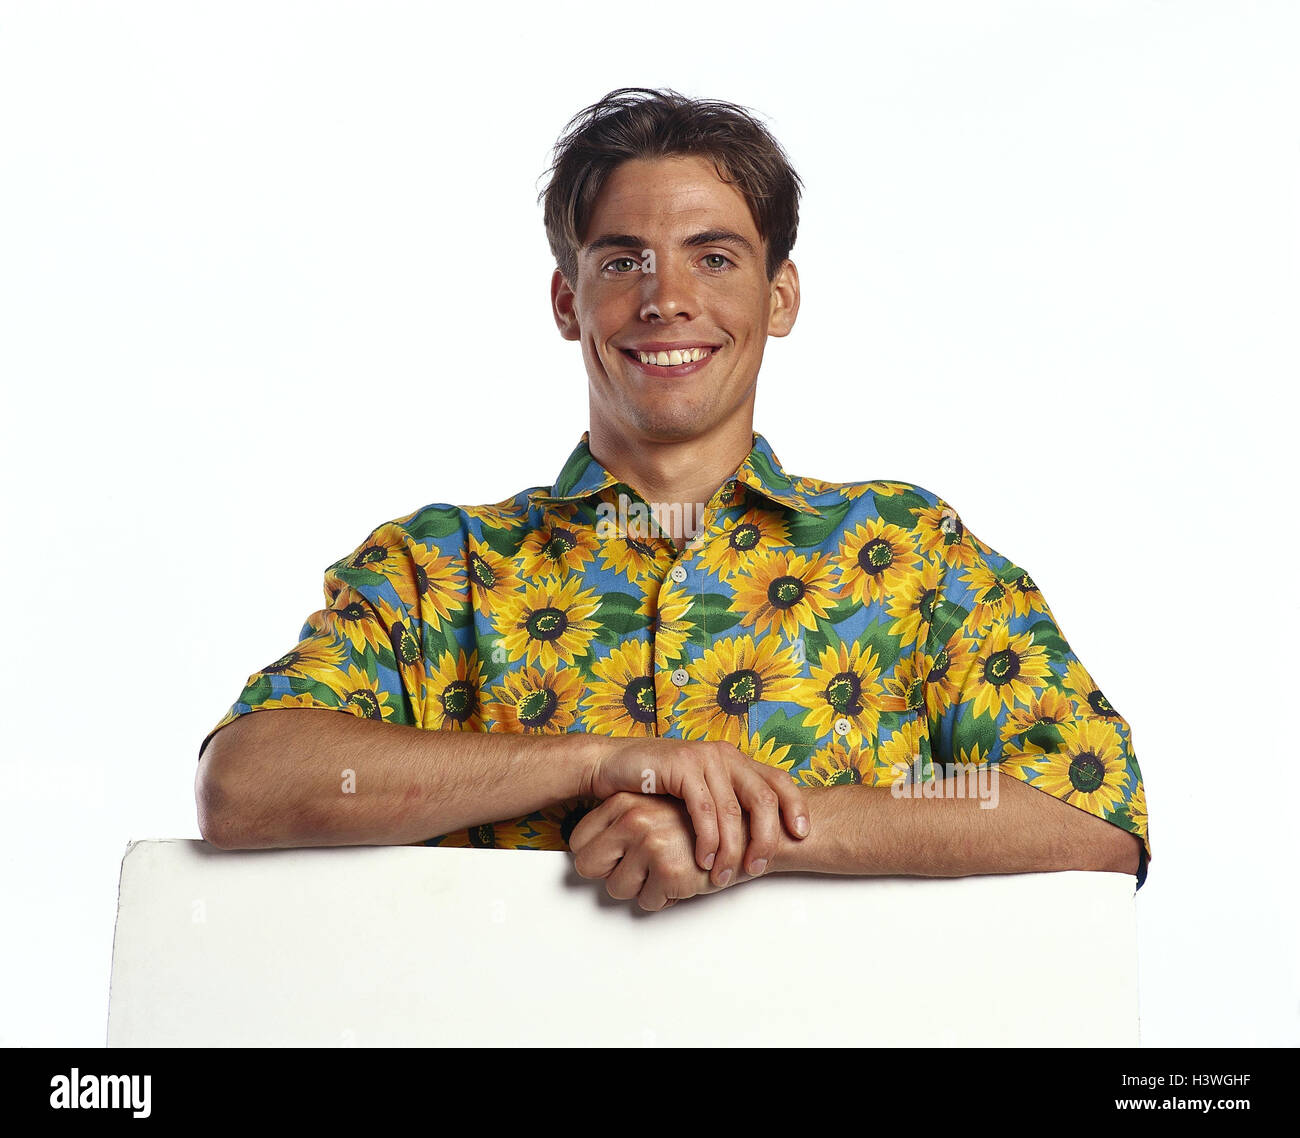 Man, young, flower shirt, portrait, studio mb 113 A6 Stock Photo